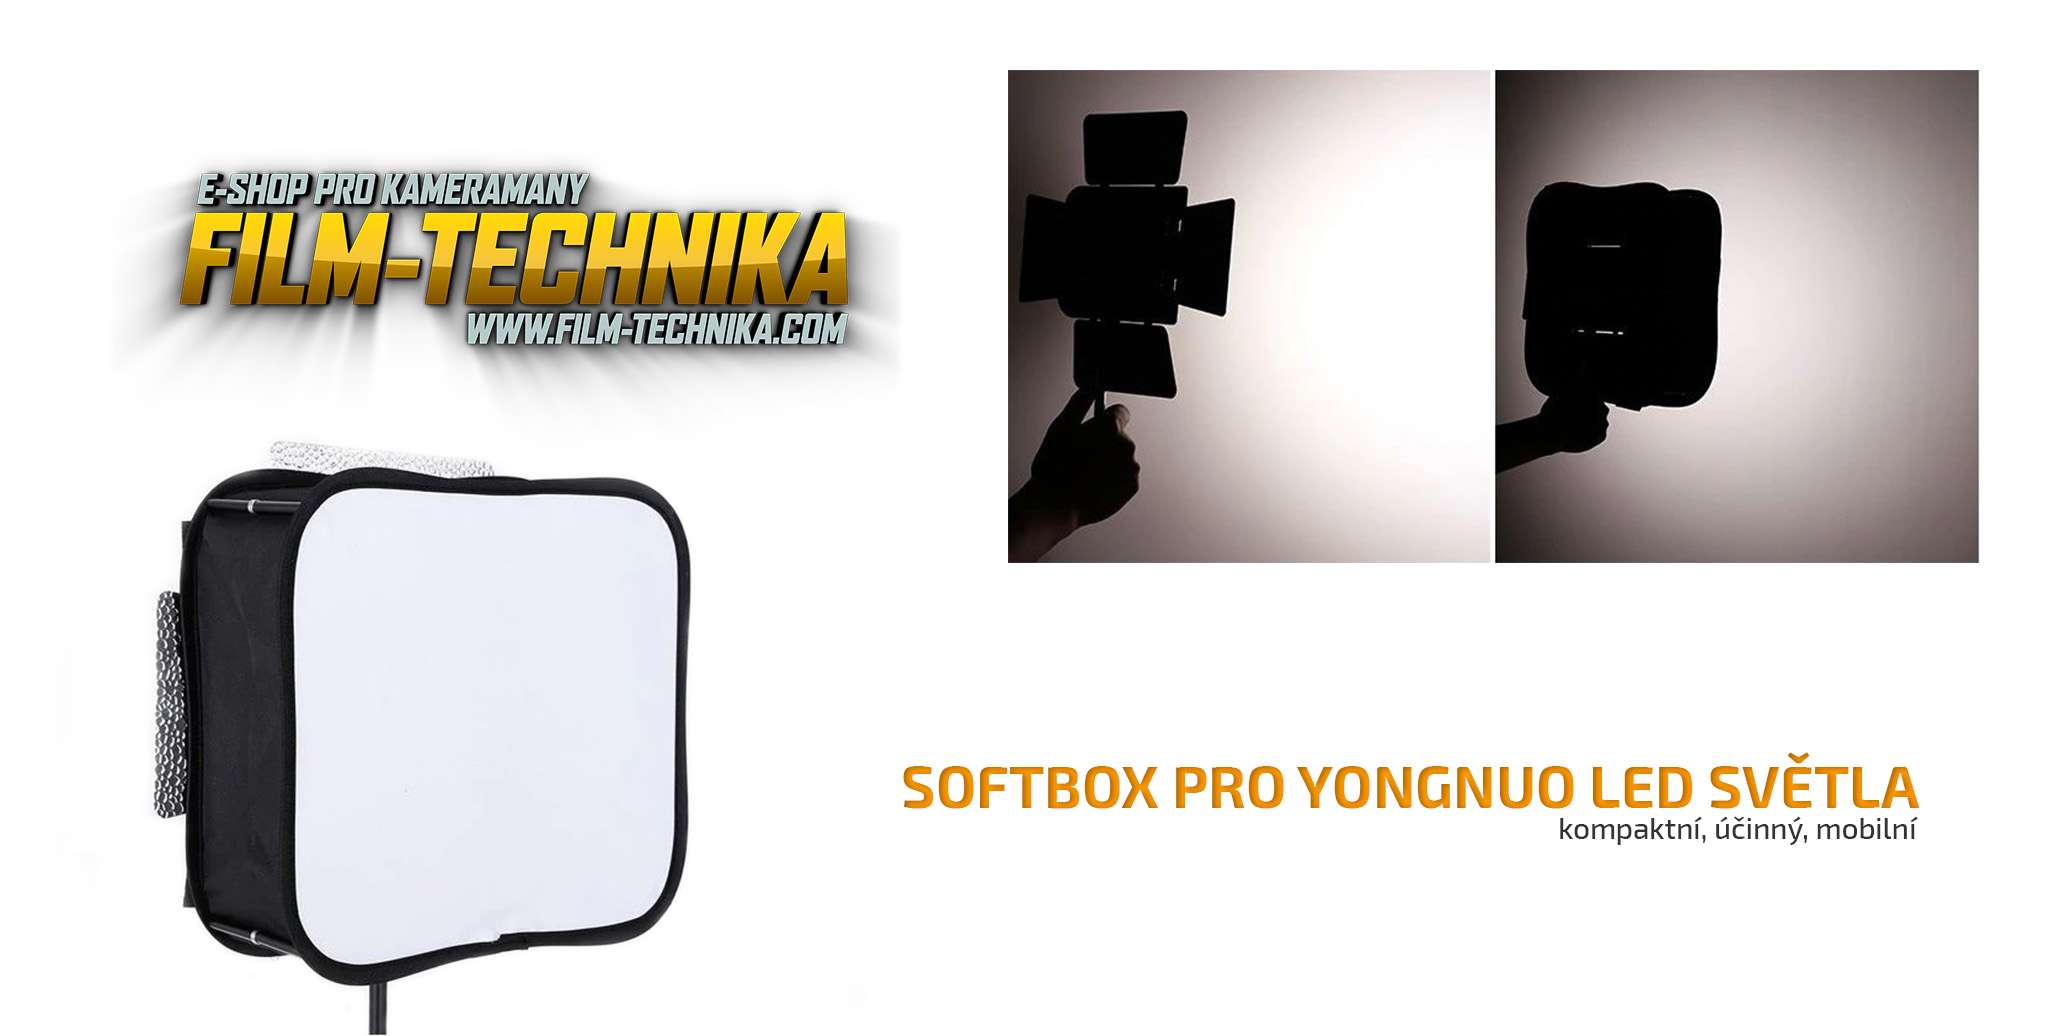 film-technika-softbox-pro-led-yn-01-intext